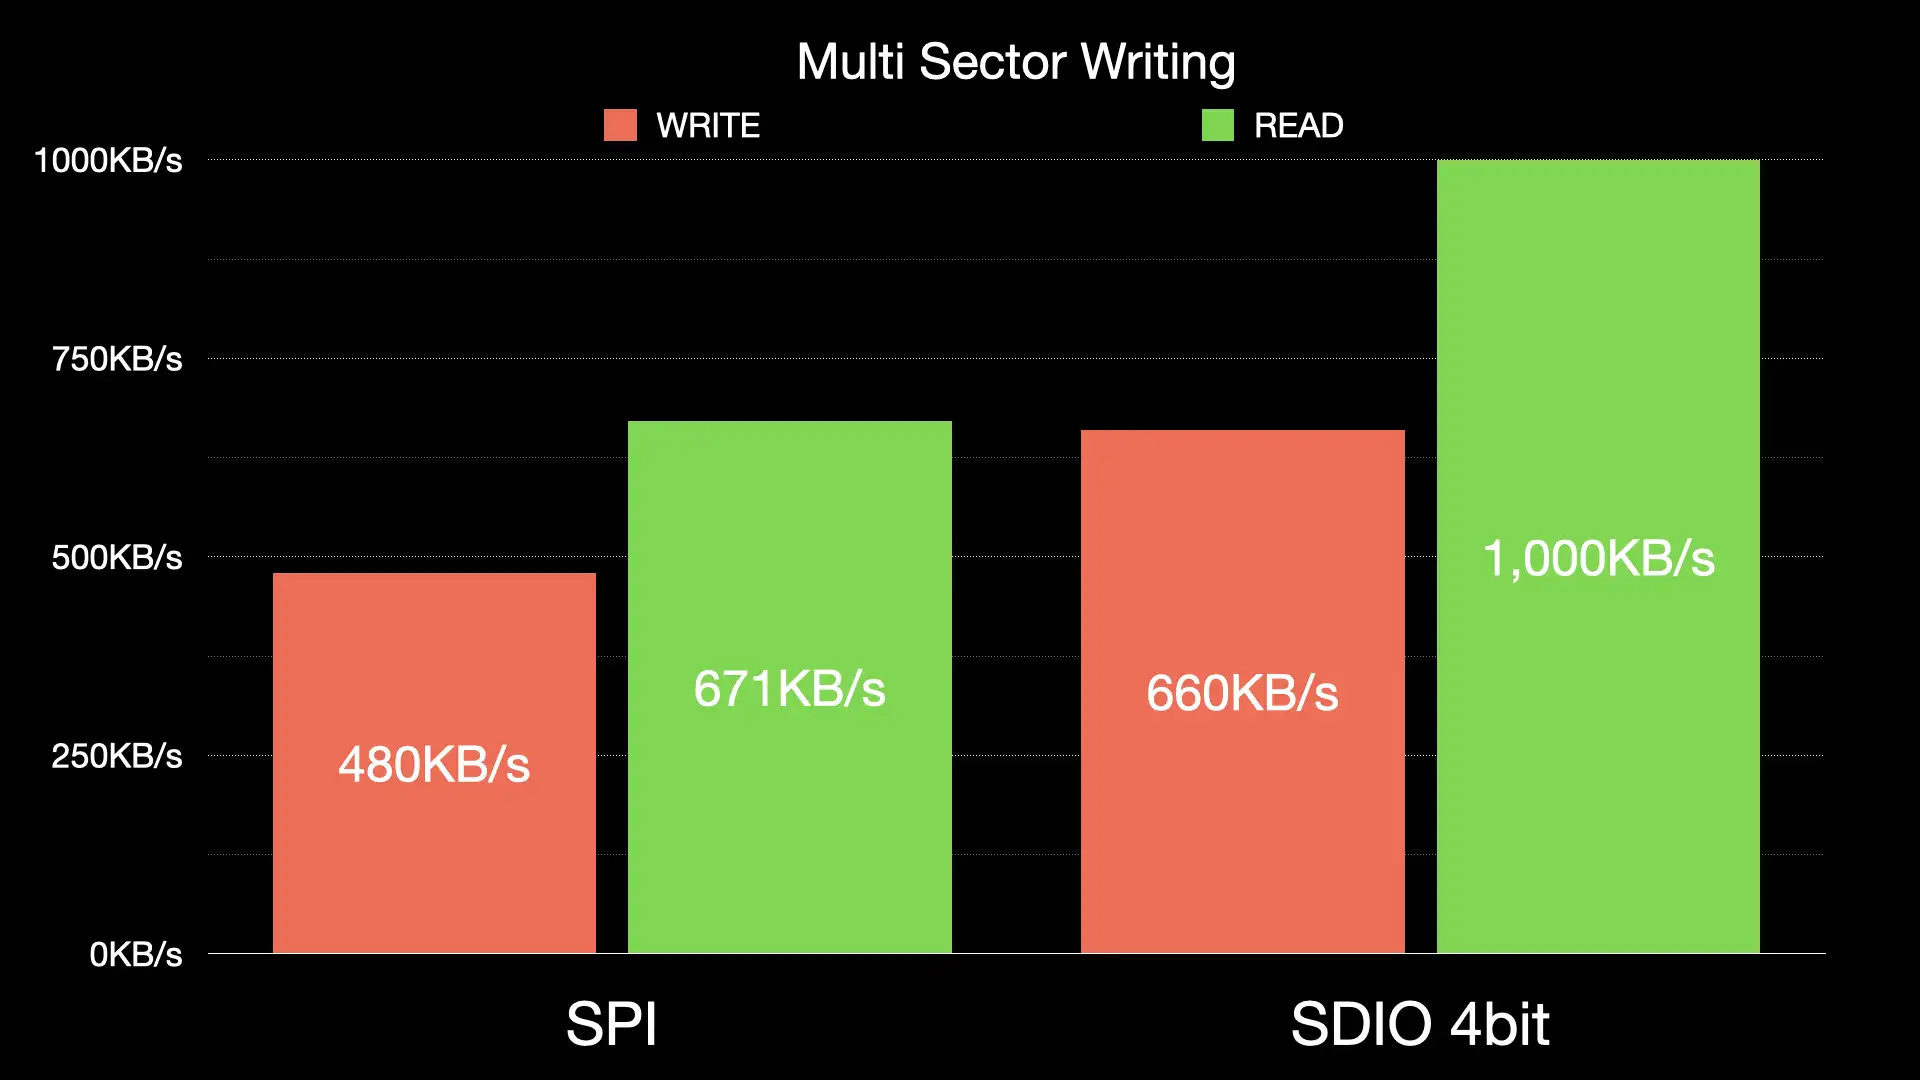 Multi Sector Writing